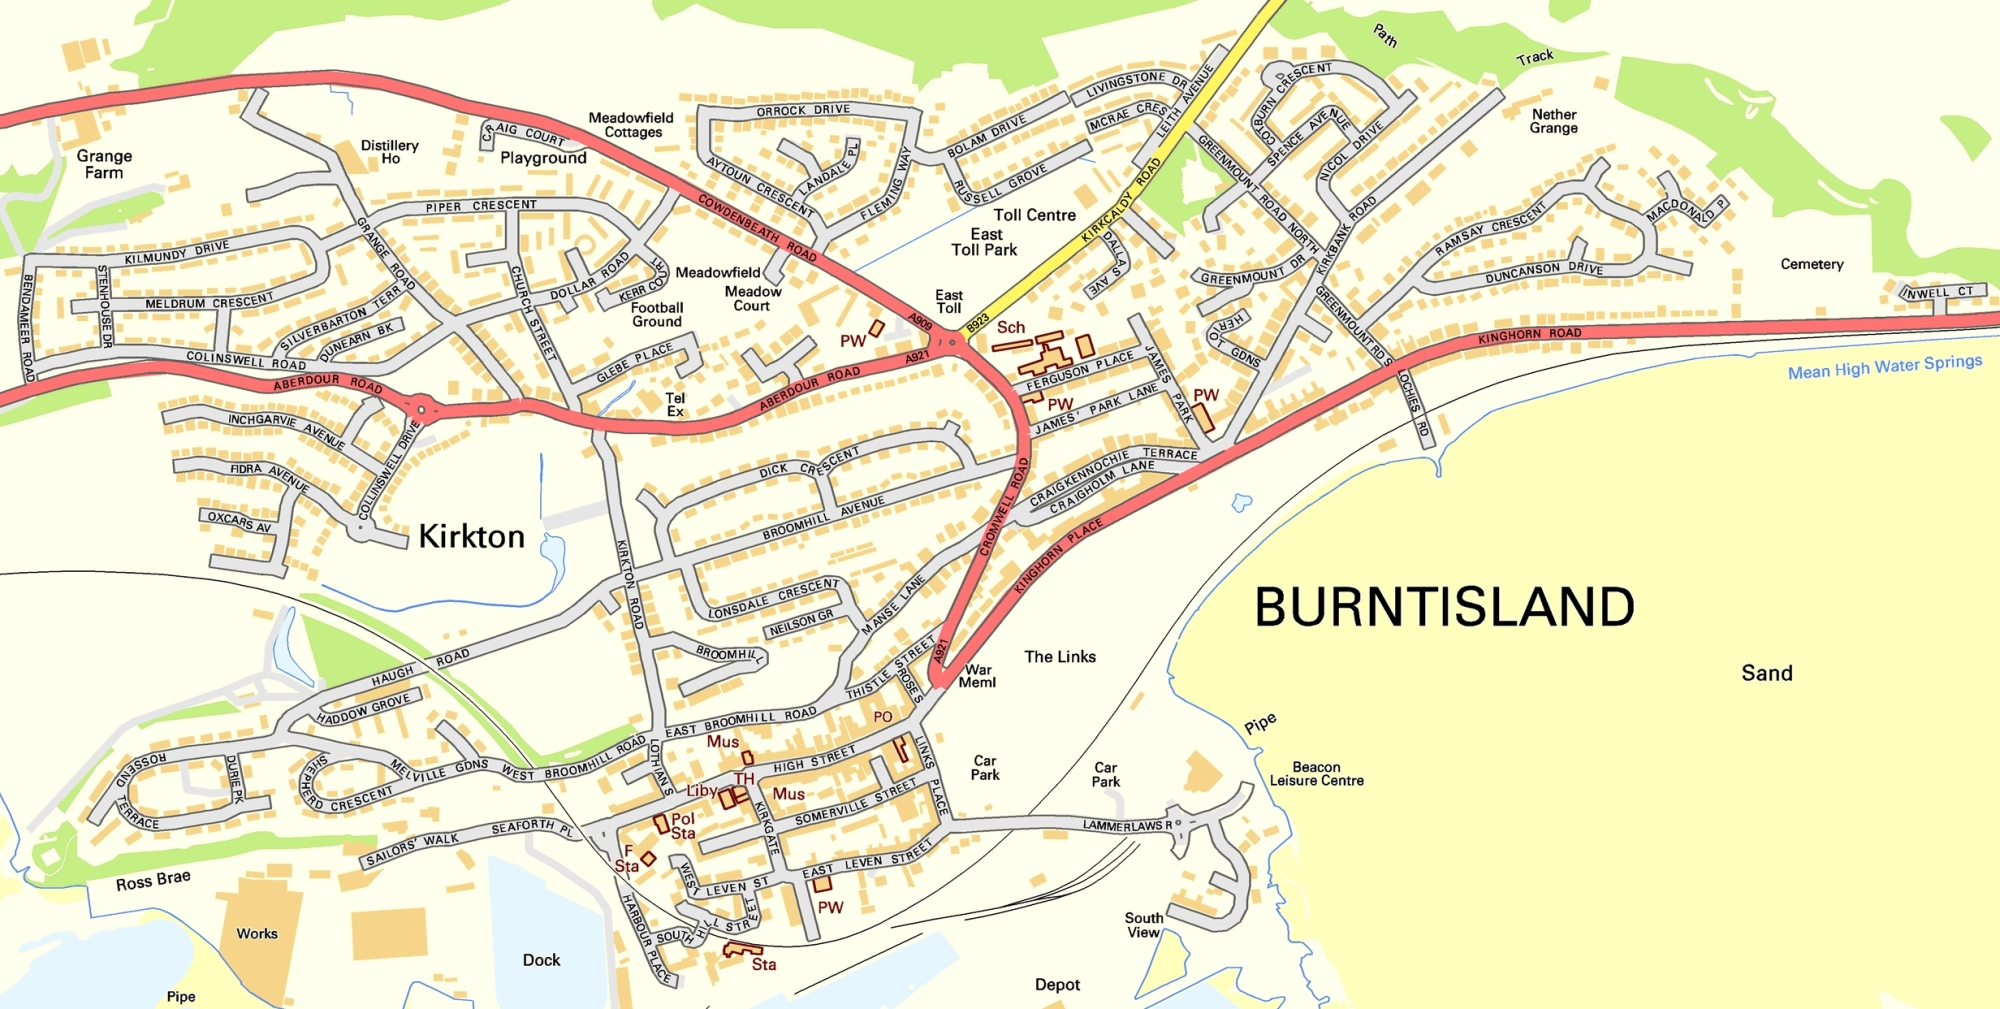 Burntisland streets (large scale)